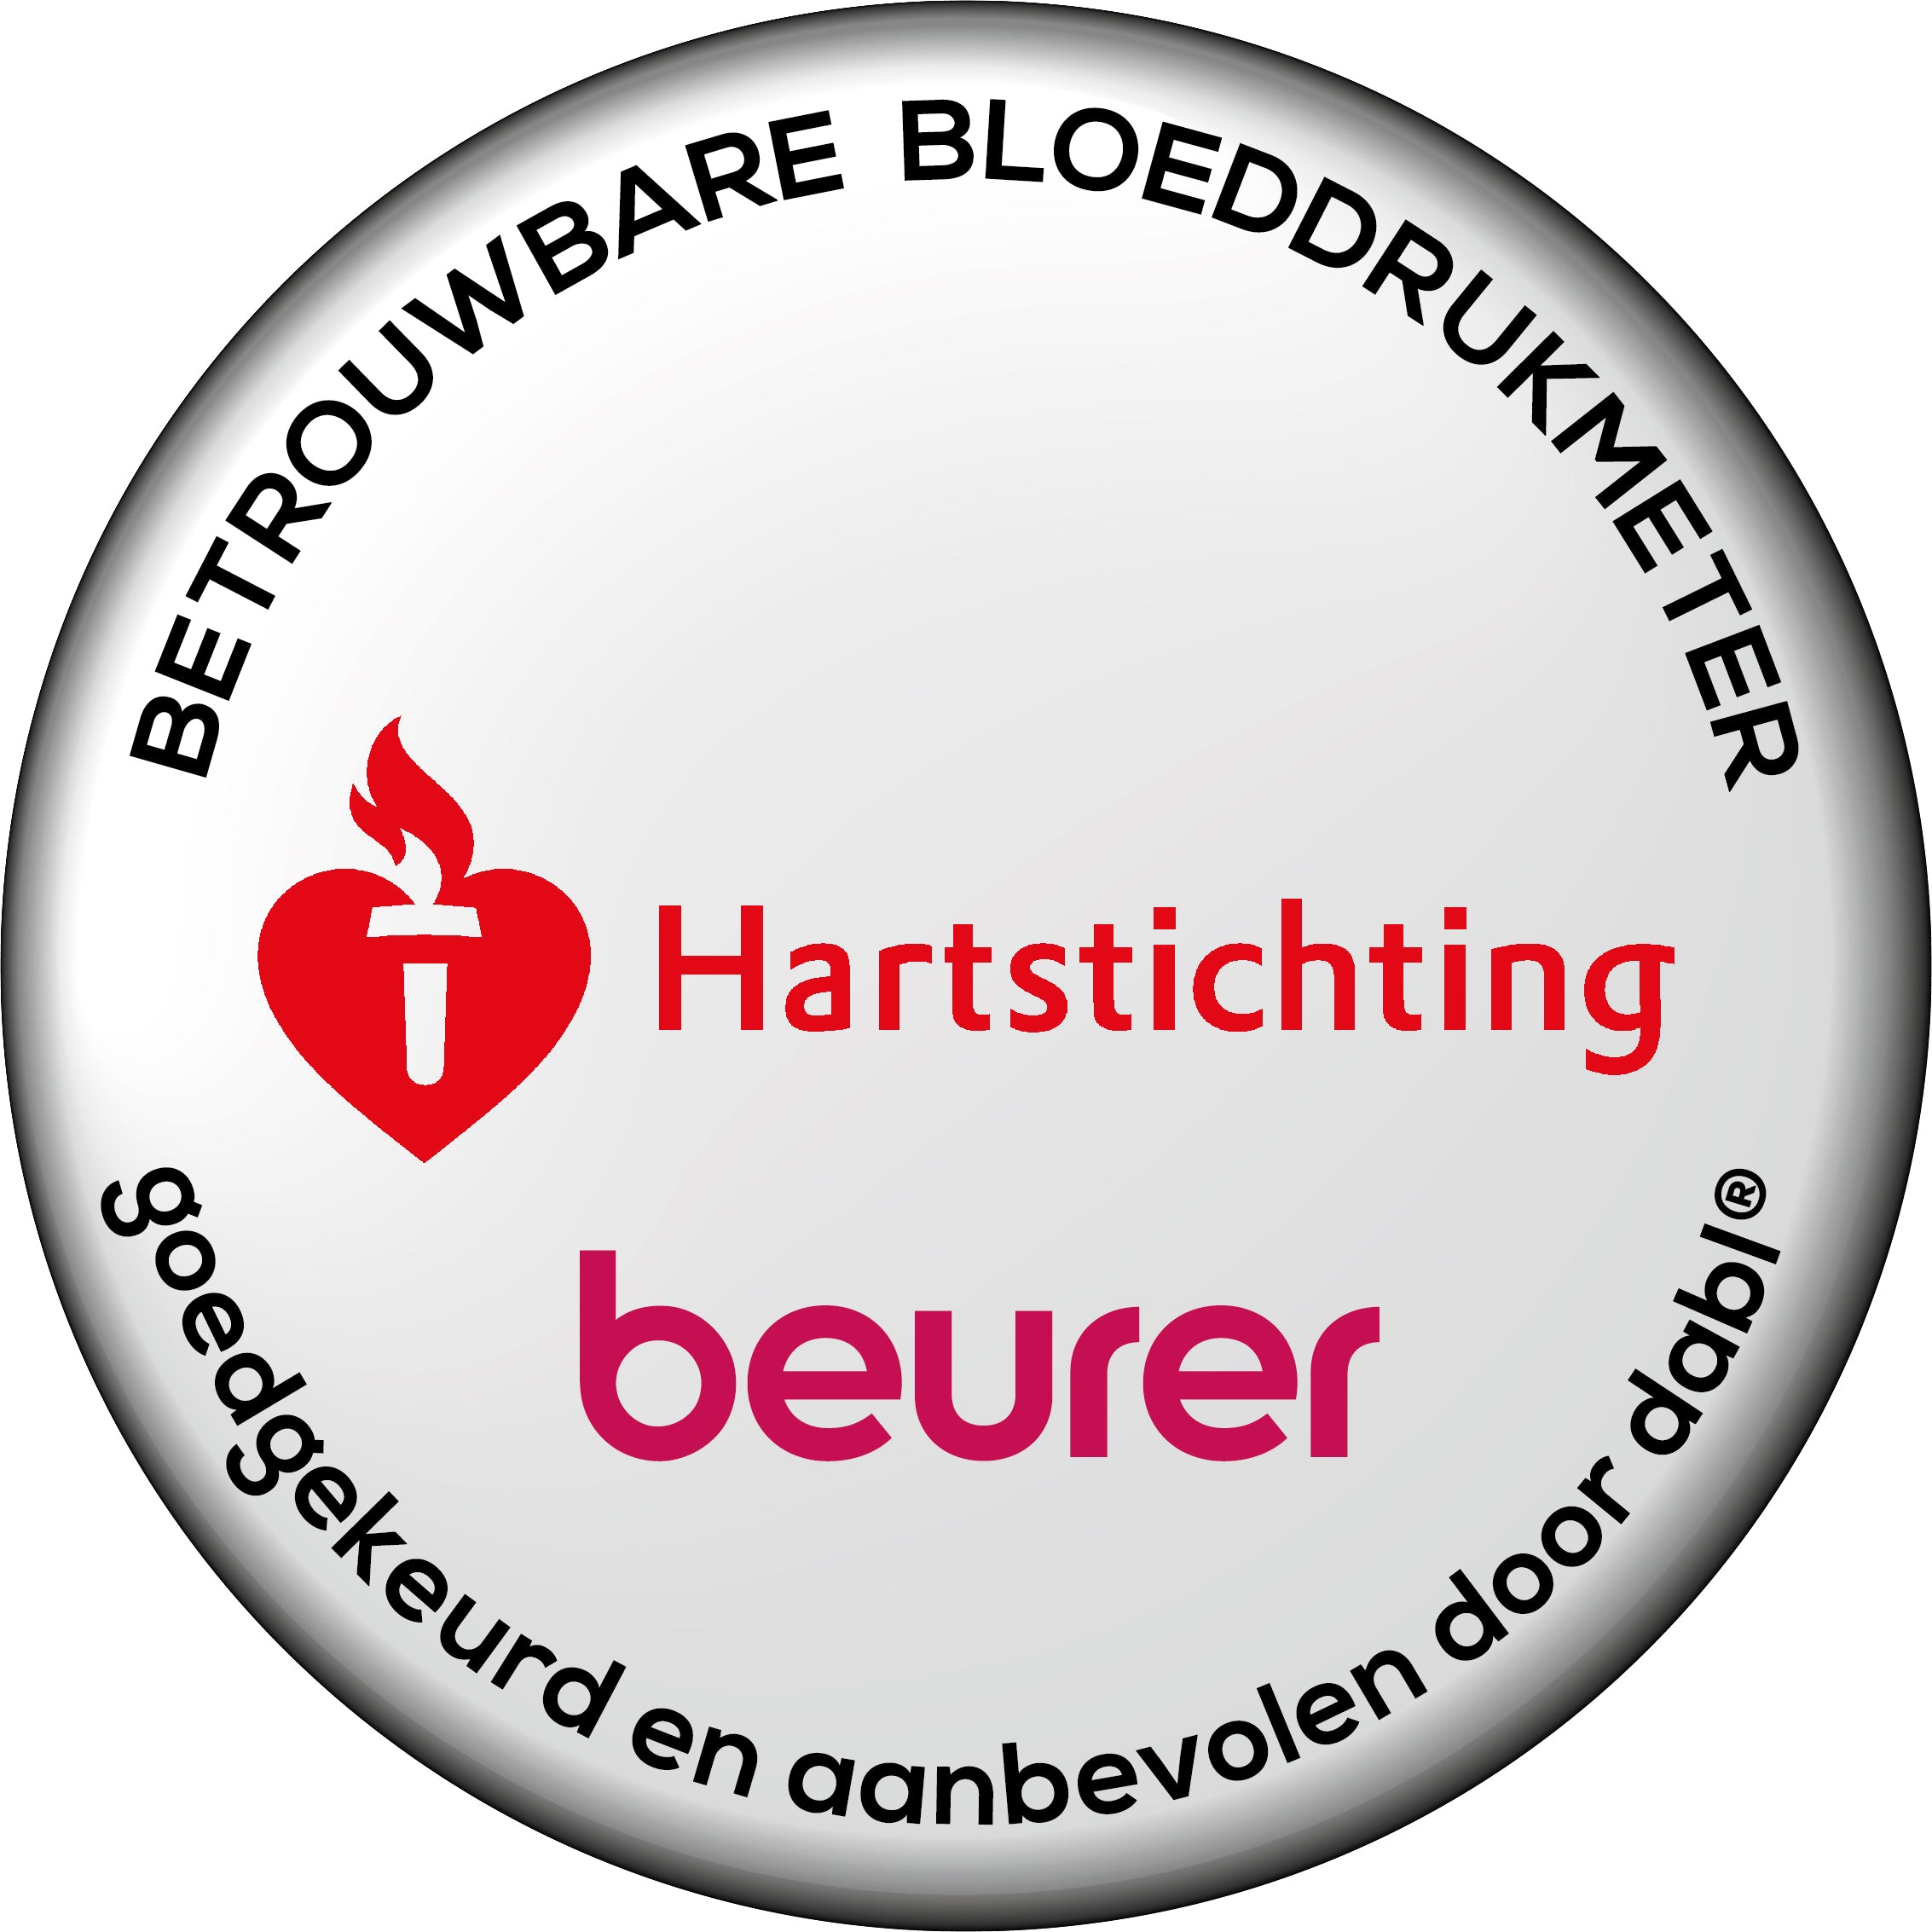 Beurer BM35 - Bloeddrukmeter bovenarm - Hartritmestoornis herkenning